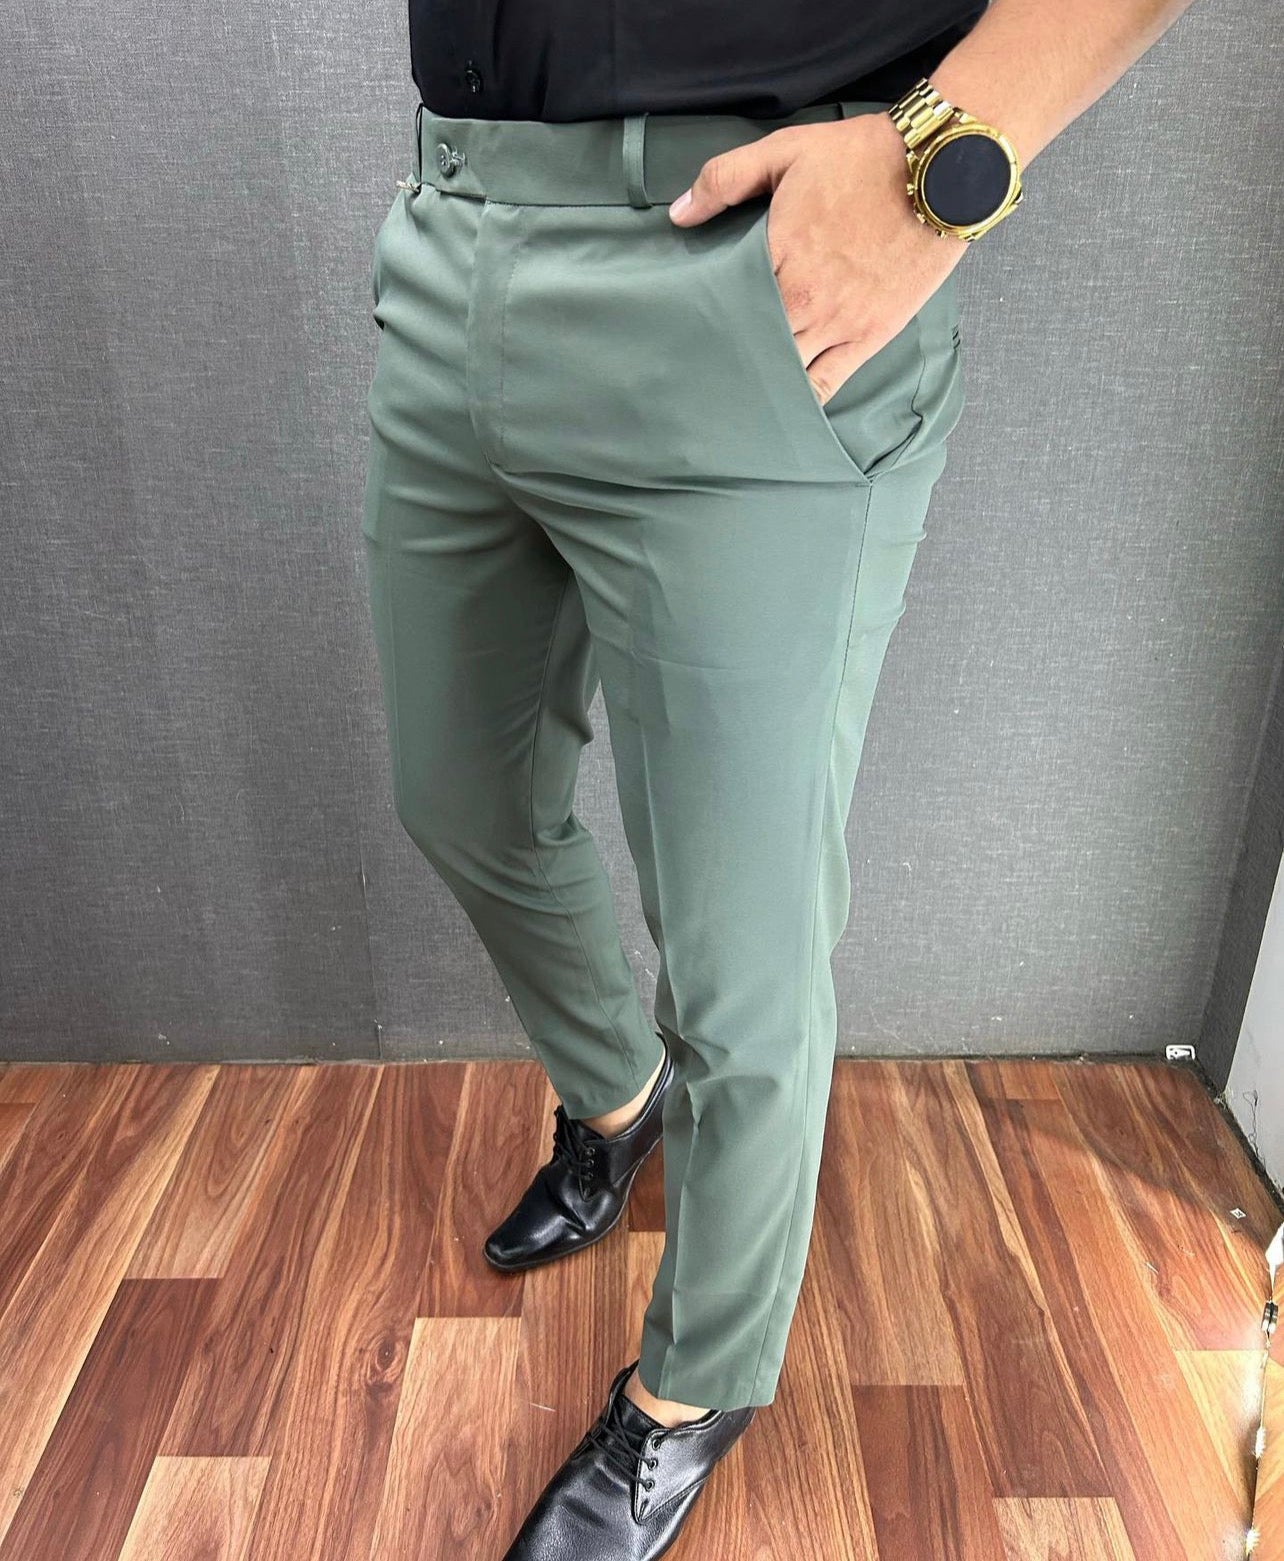 Pesado Olive Green Trouser For Men's Pants